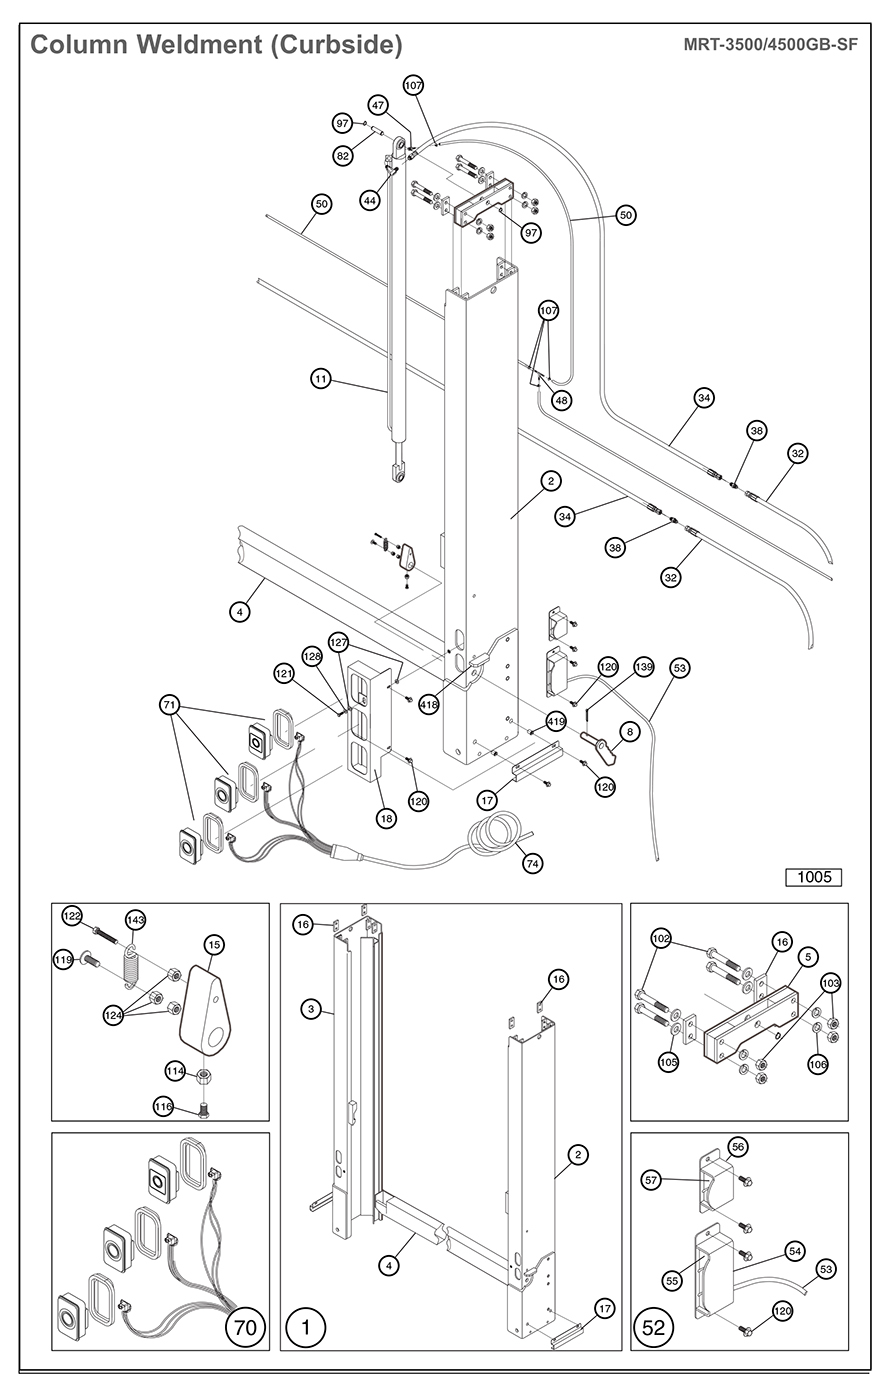 Anthony MRT-3500/4500GB-SF Curbside Column Weldment Diagram